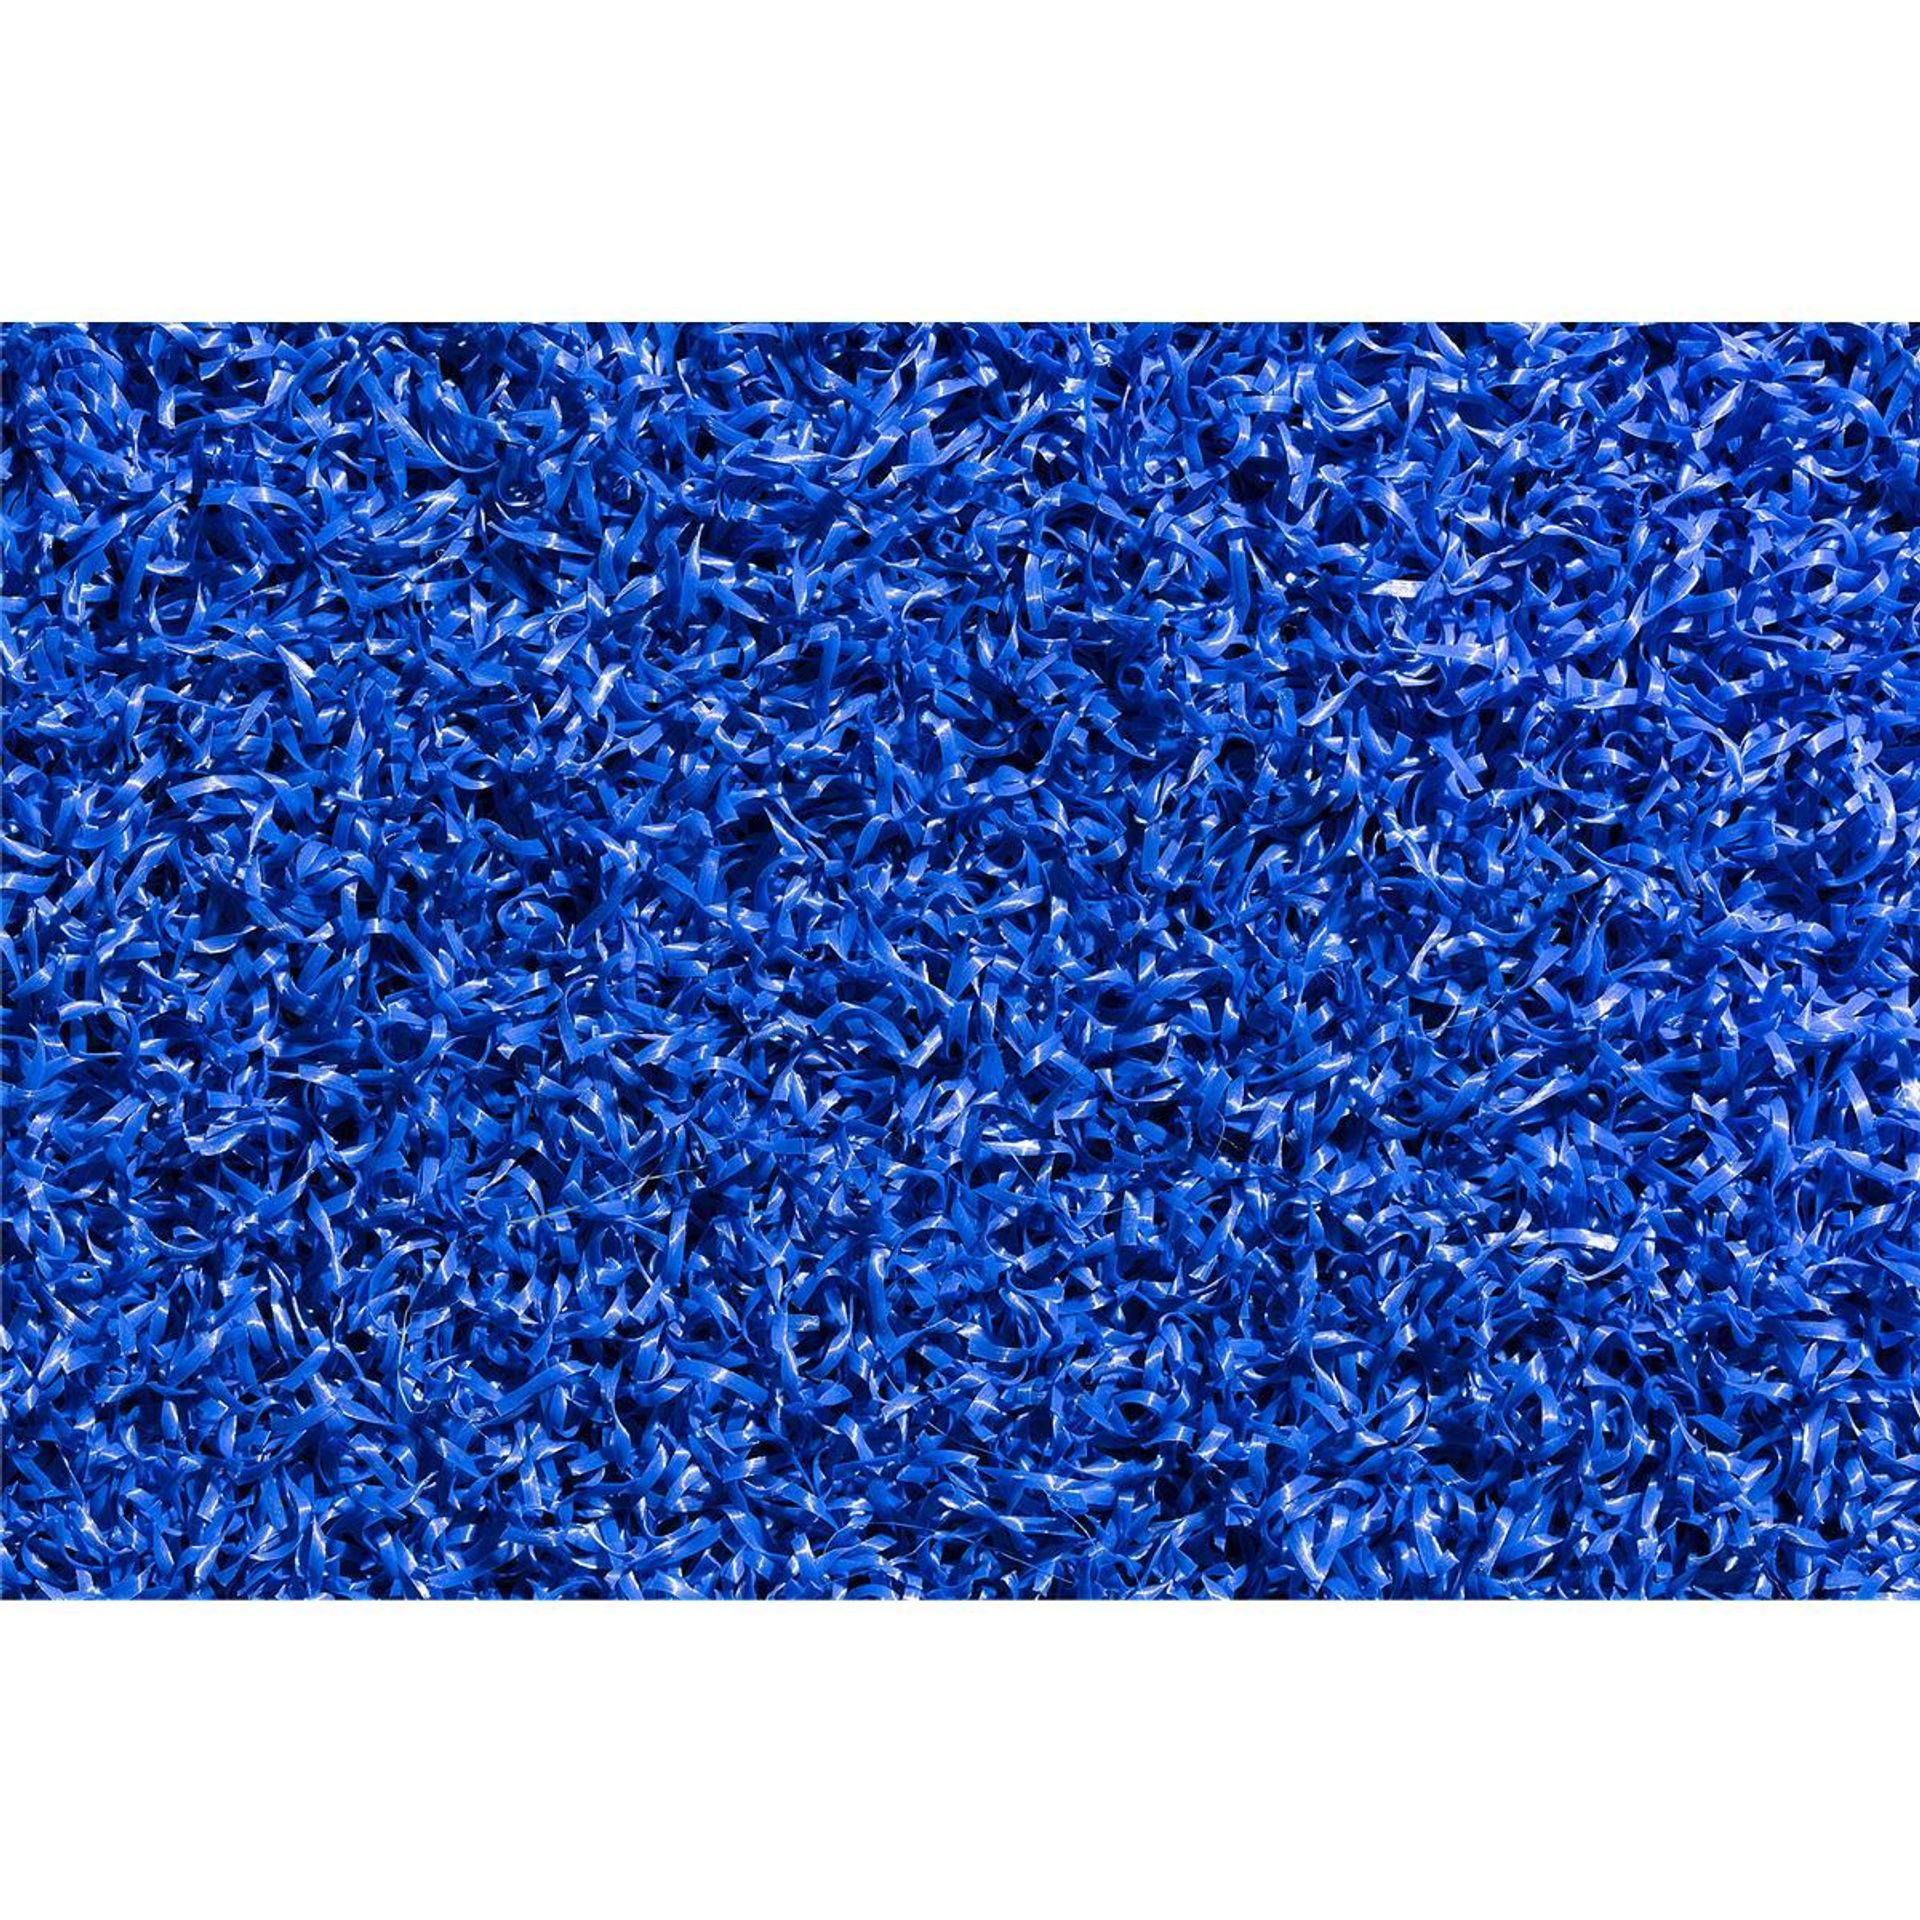 Kunstrasen 446 Colourful 010 blue - Breite 400 cm - Couponbezug